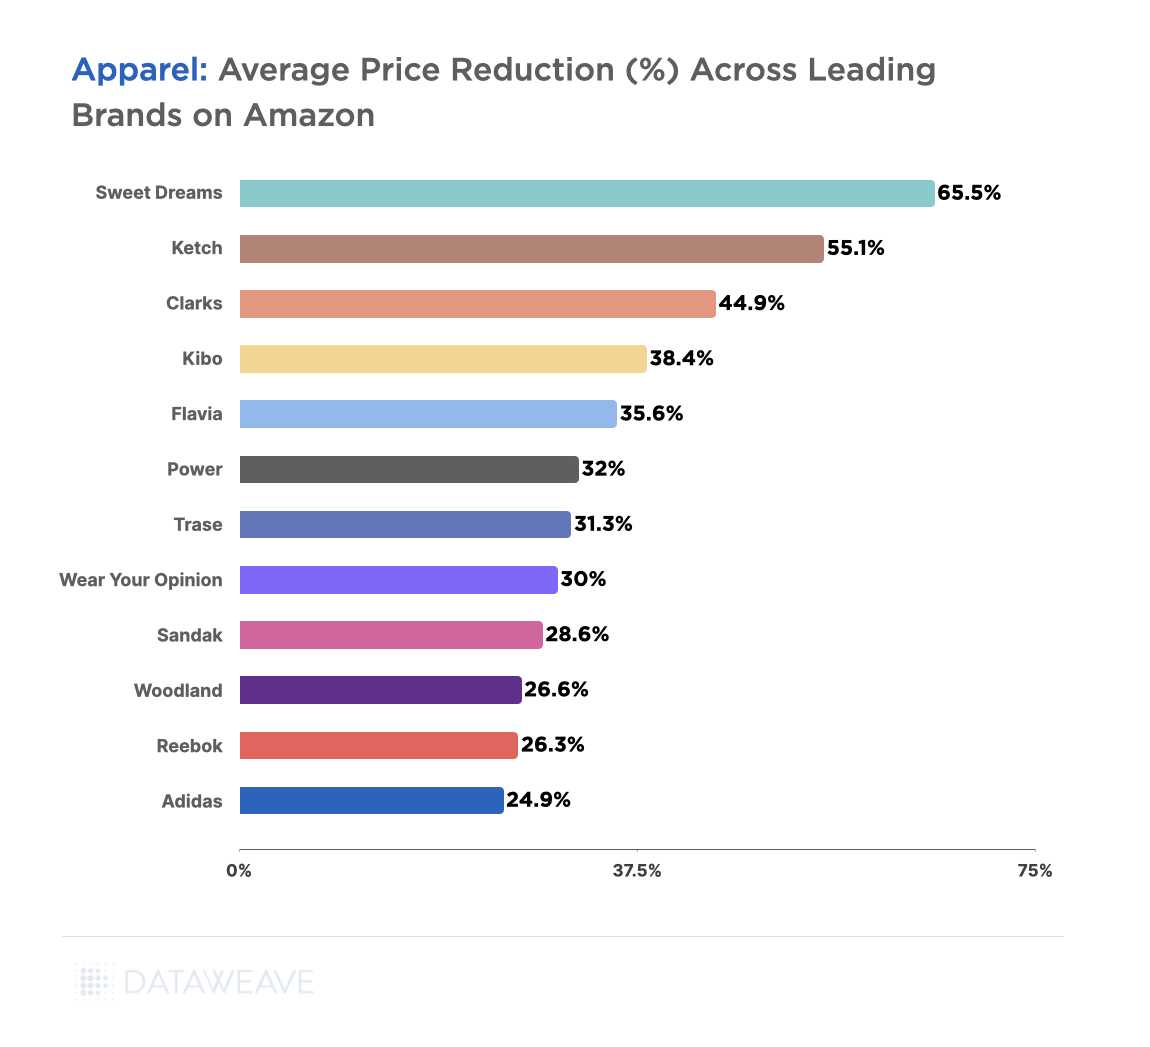 Apparel average price reduction across leading brands on Amazon.